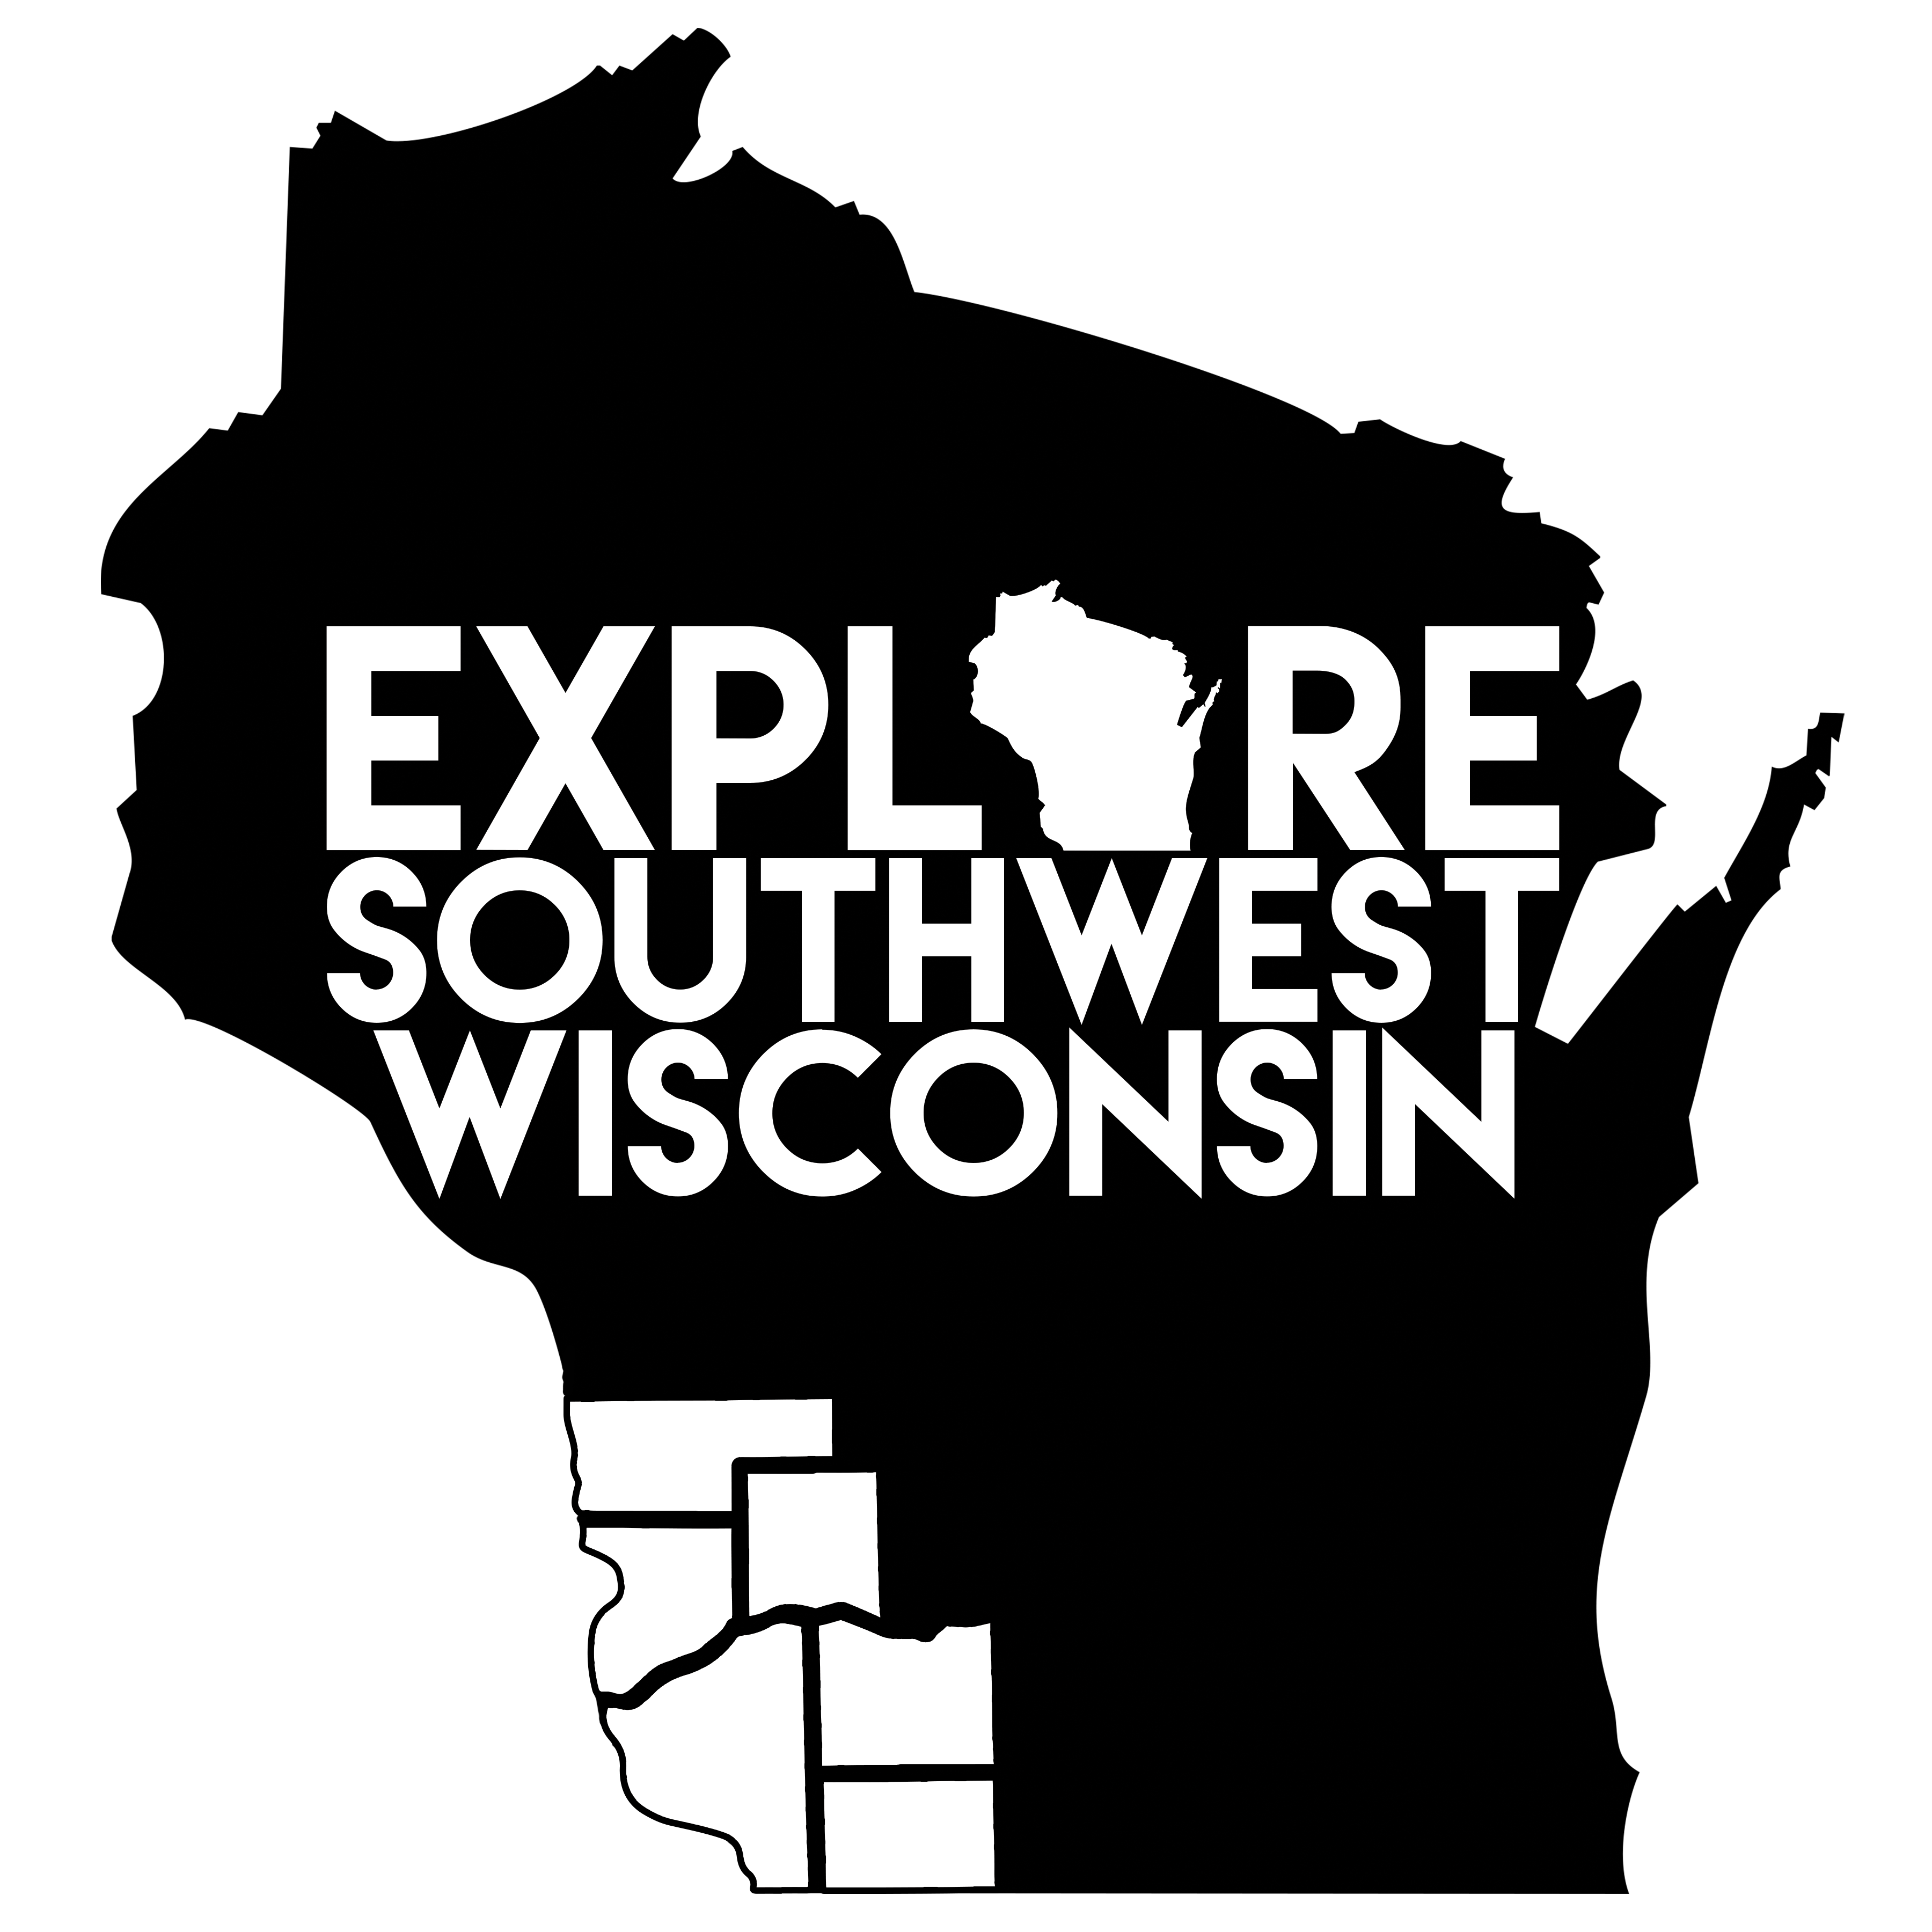 Mississippi River – Explore Southwest Wisconsin